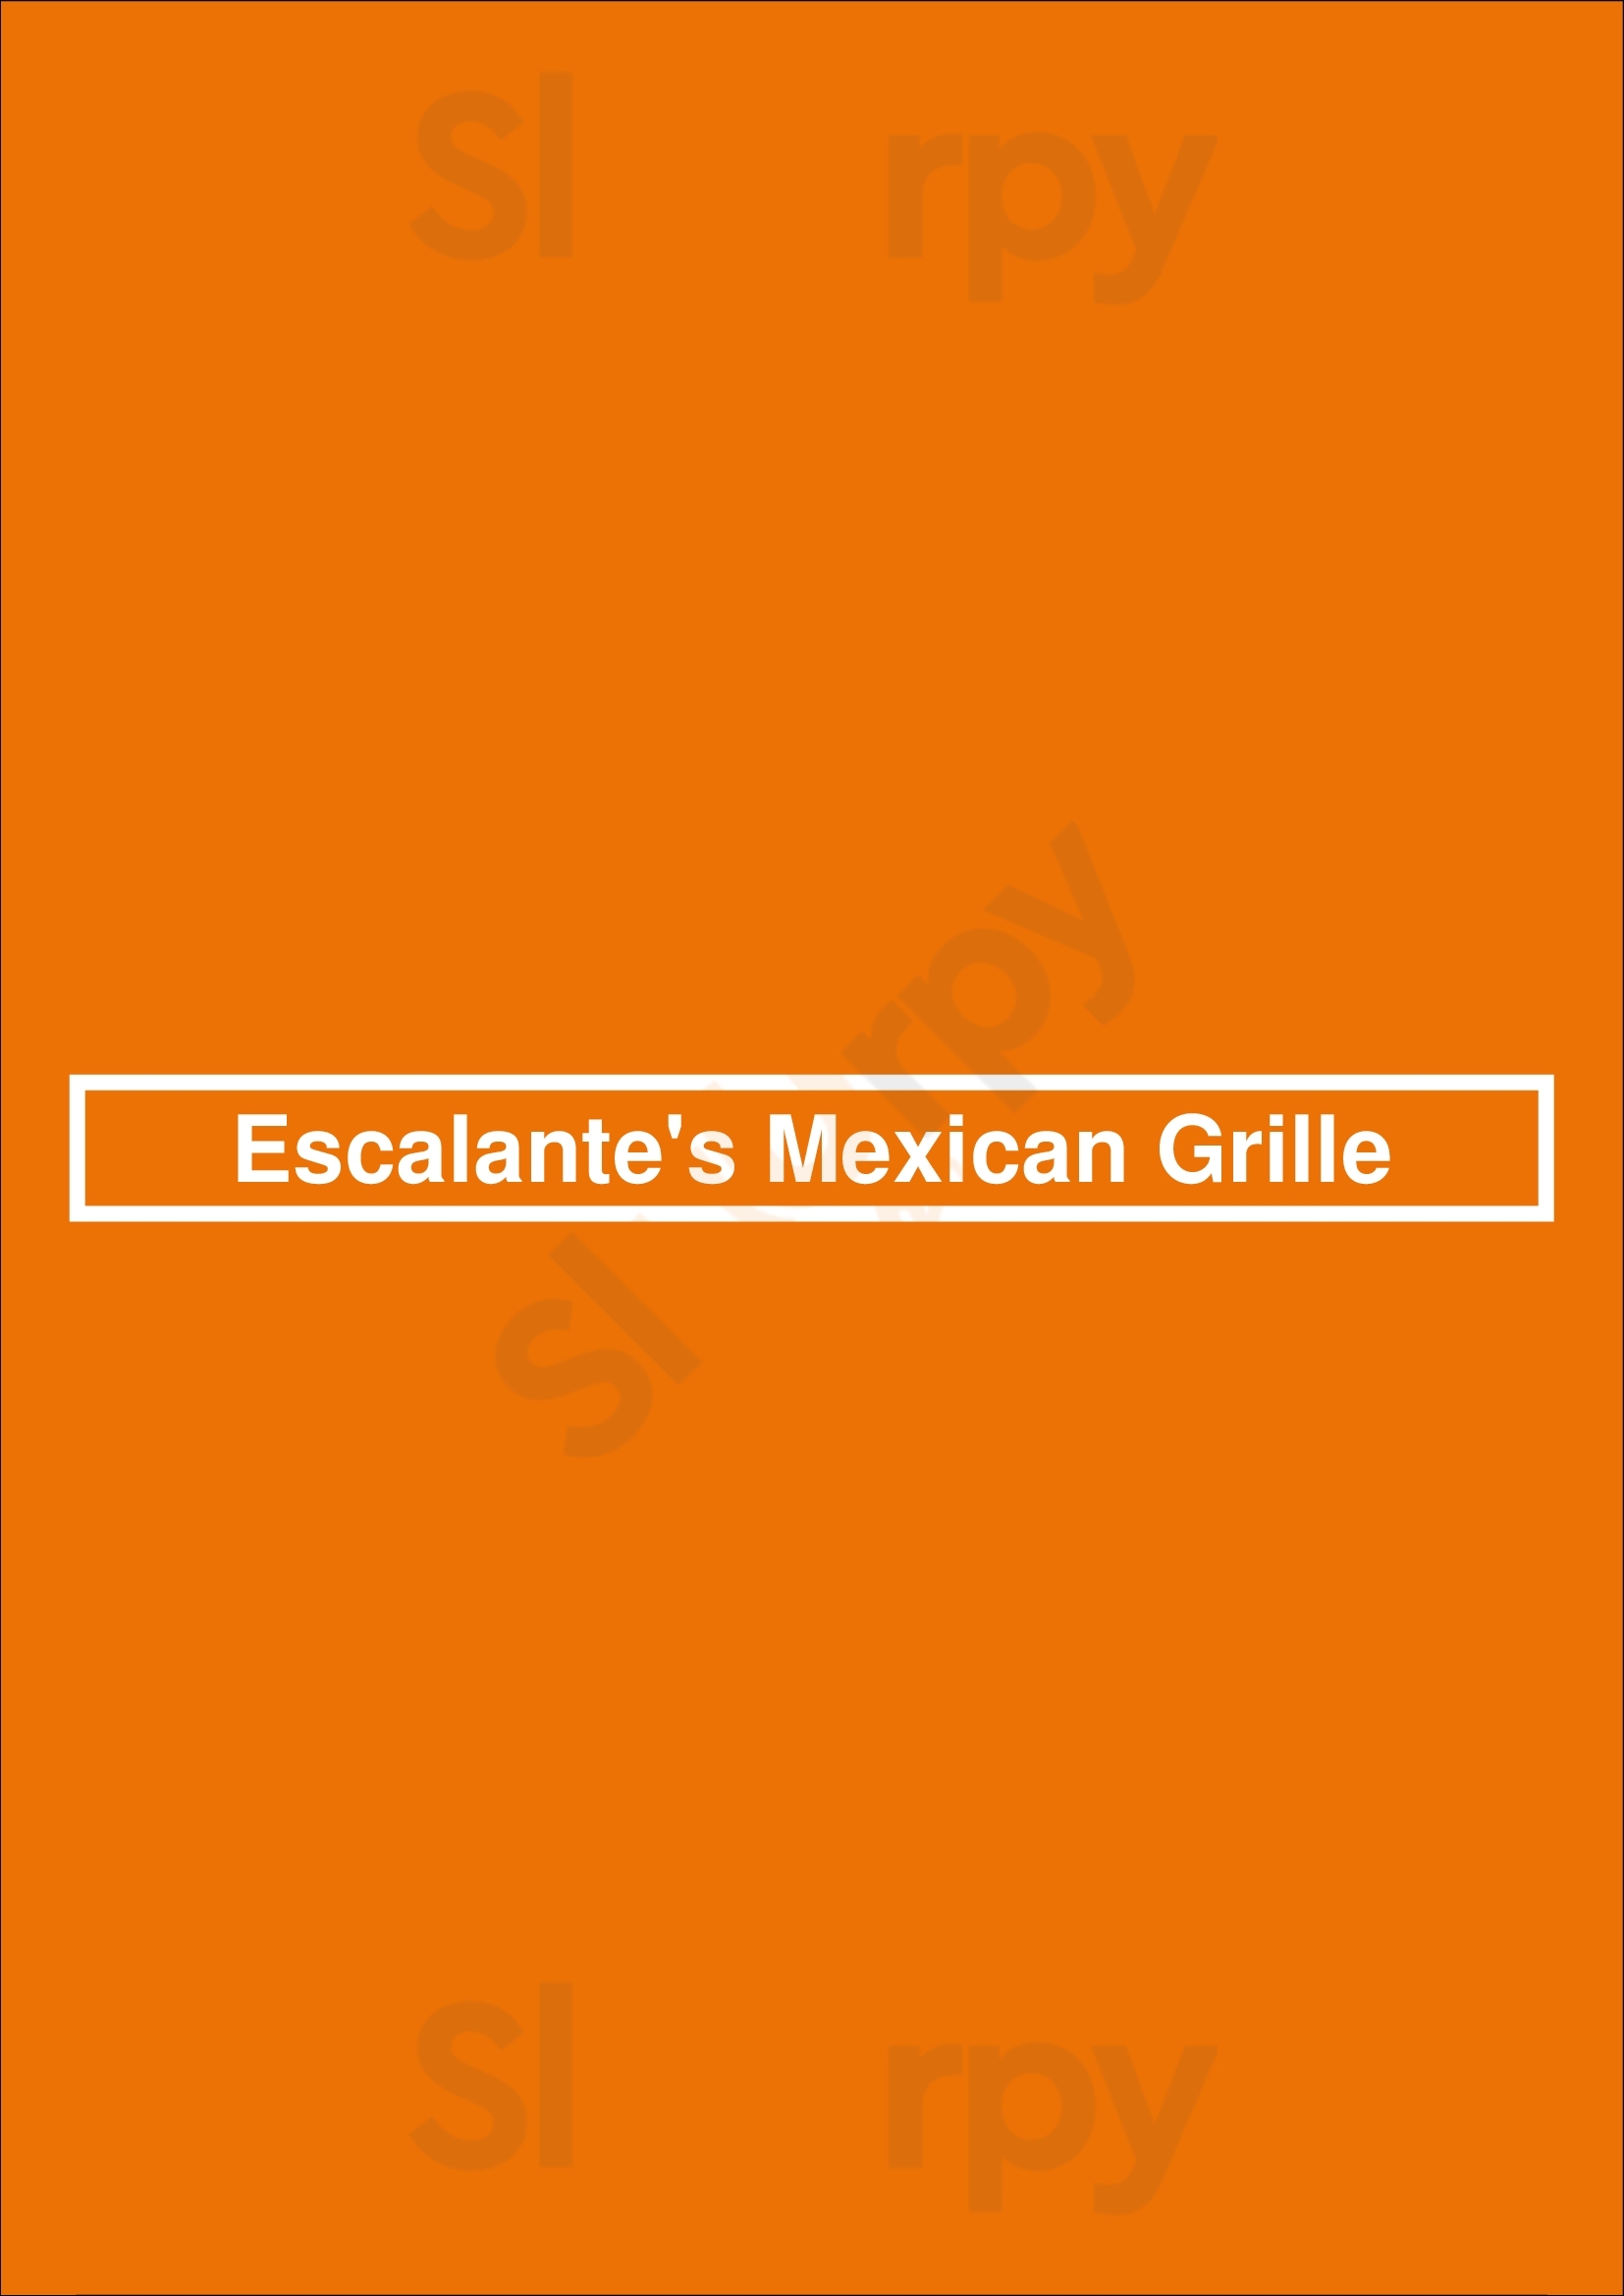 Escalante's Mexican Grille Houston Menu - 1